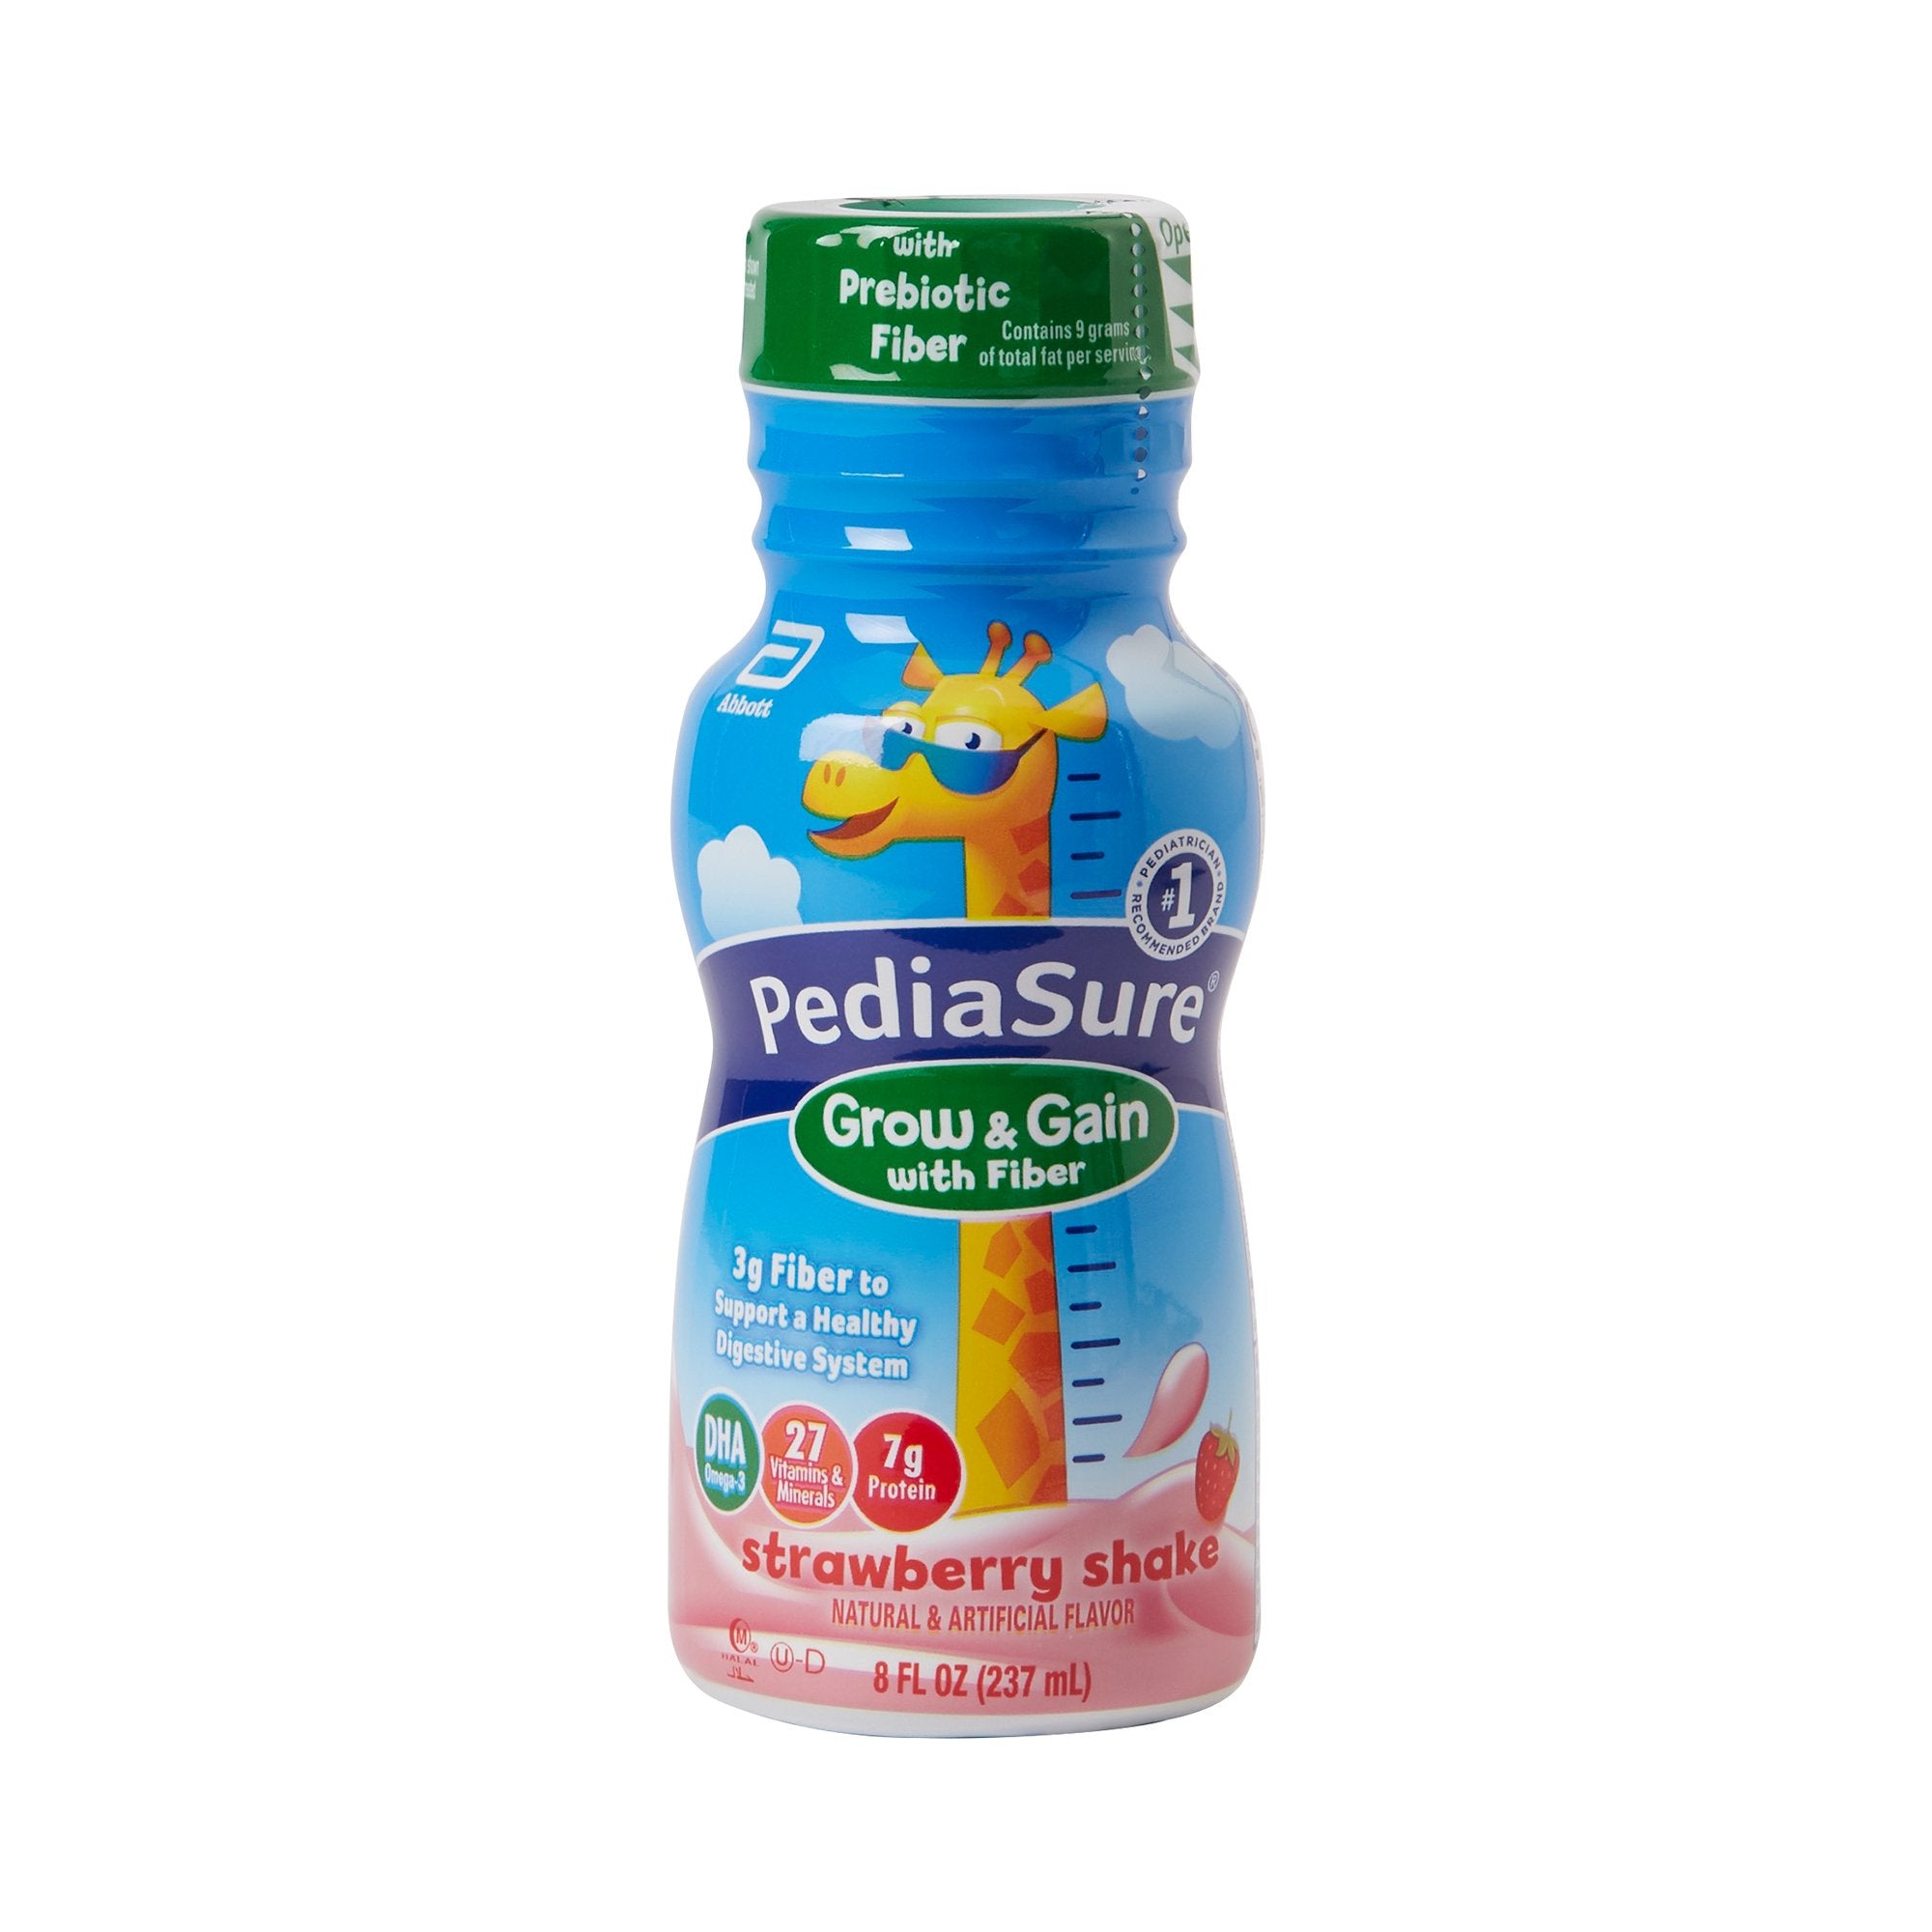 PediaSure Grow & Gain with Fiber Pediatric Oral Supplement, Strawberry, 8 oz. Bottle -Case of 24